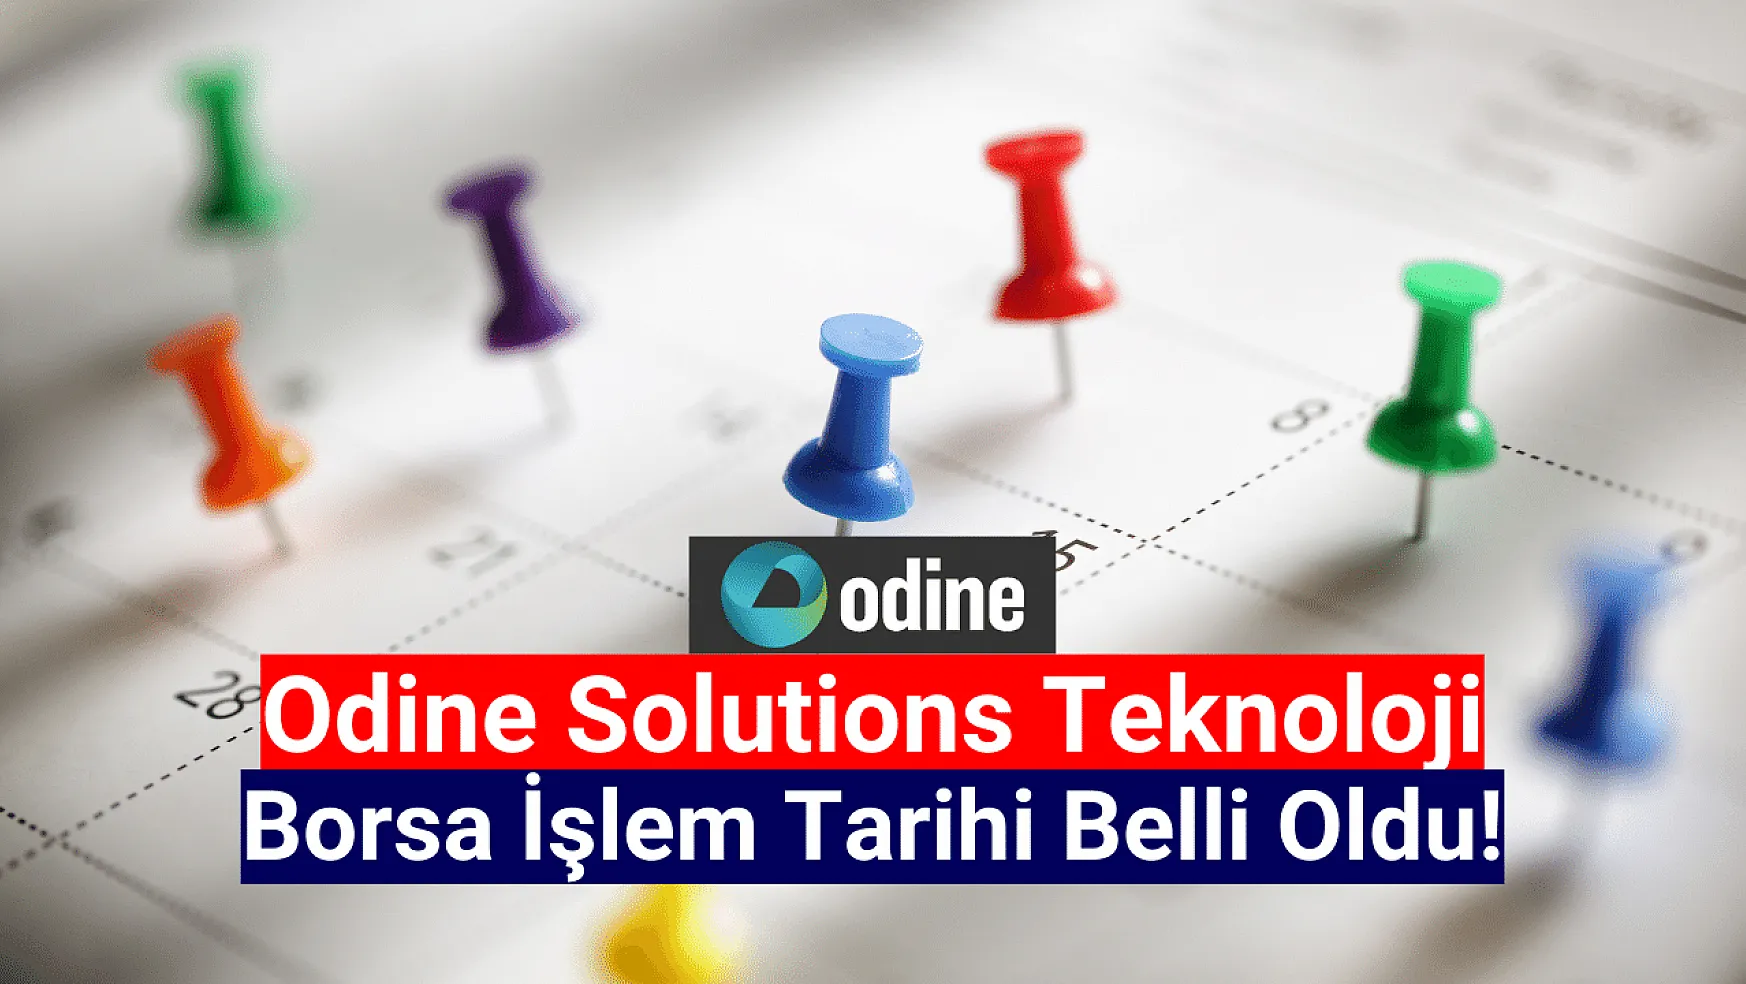 Odine Solutions Teknoloji işlem tarihi belli oldu!